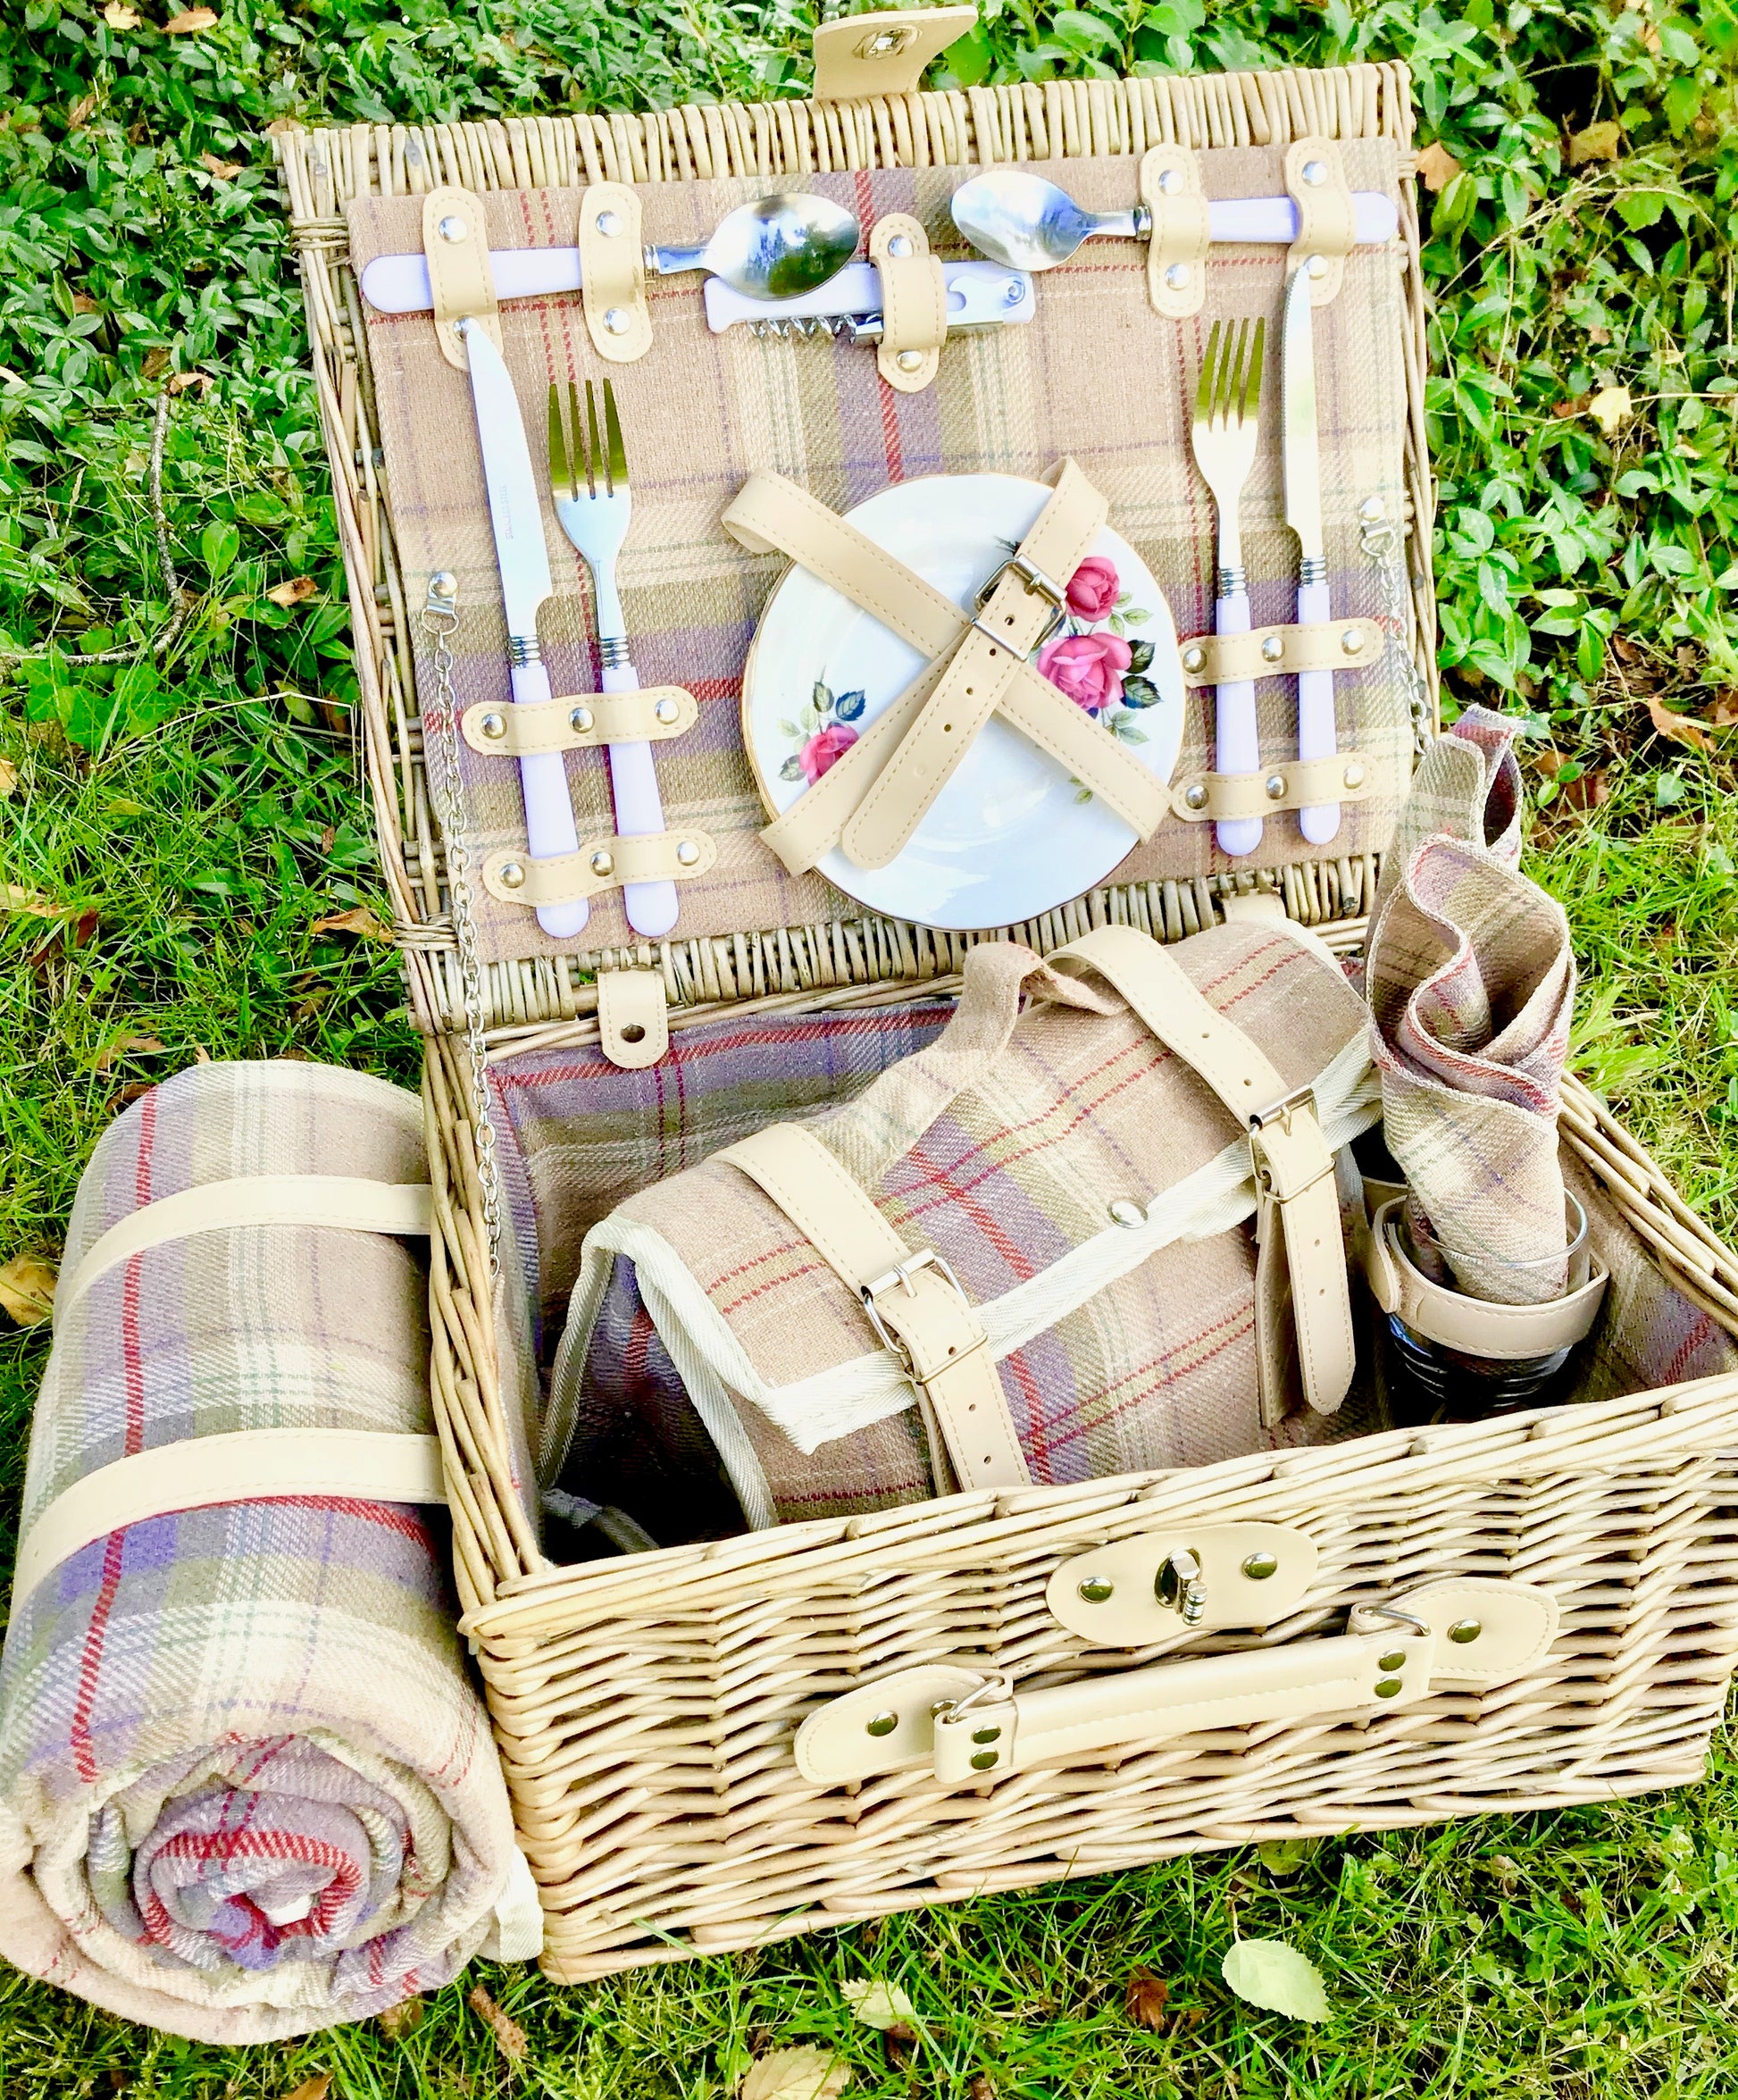 The Lulworth Cove lavender tweed picnic hamper for 2